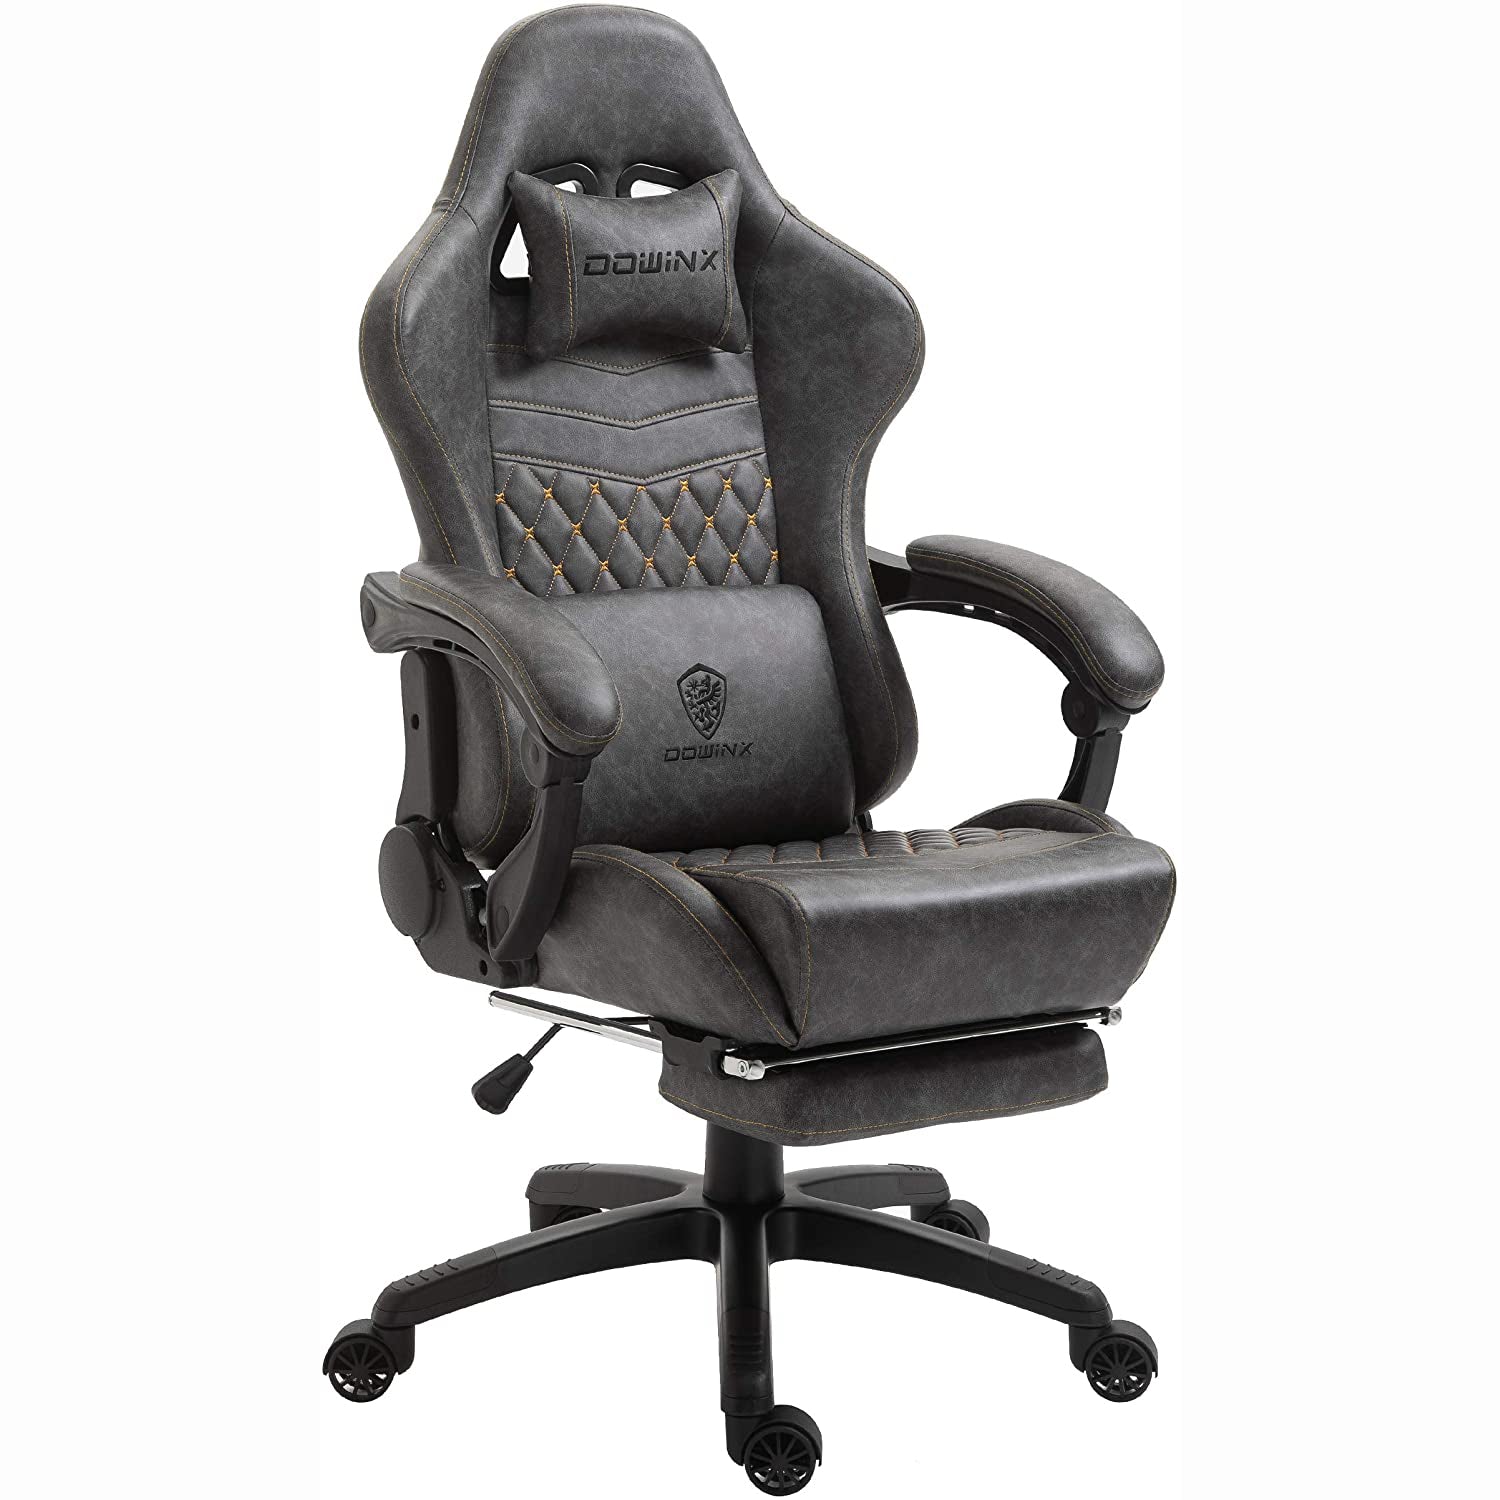 Dowinx 6689 Gaming Office Chair Ergonomic Racing Style-Light Grey 